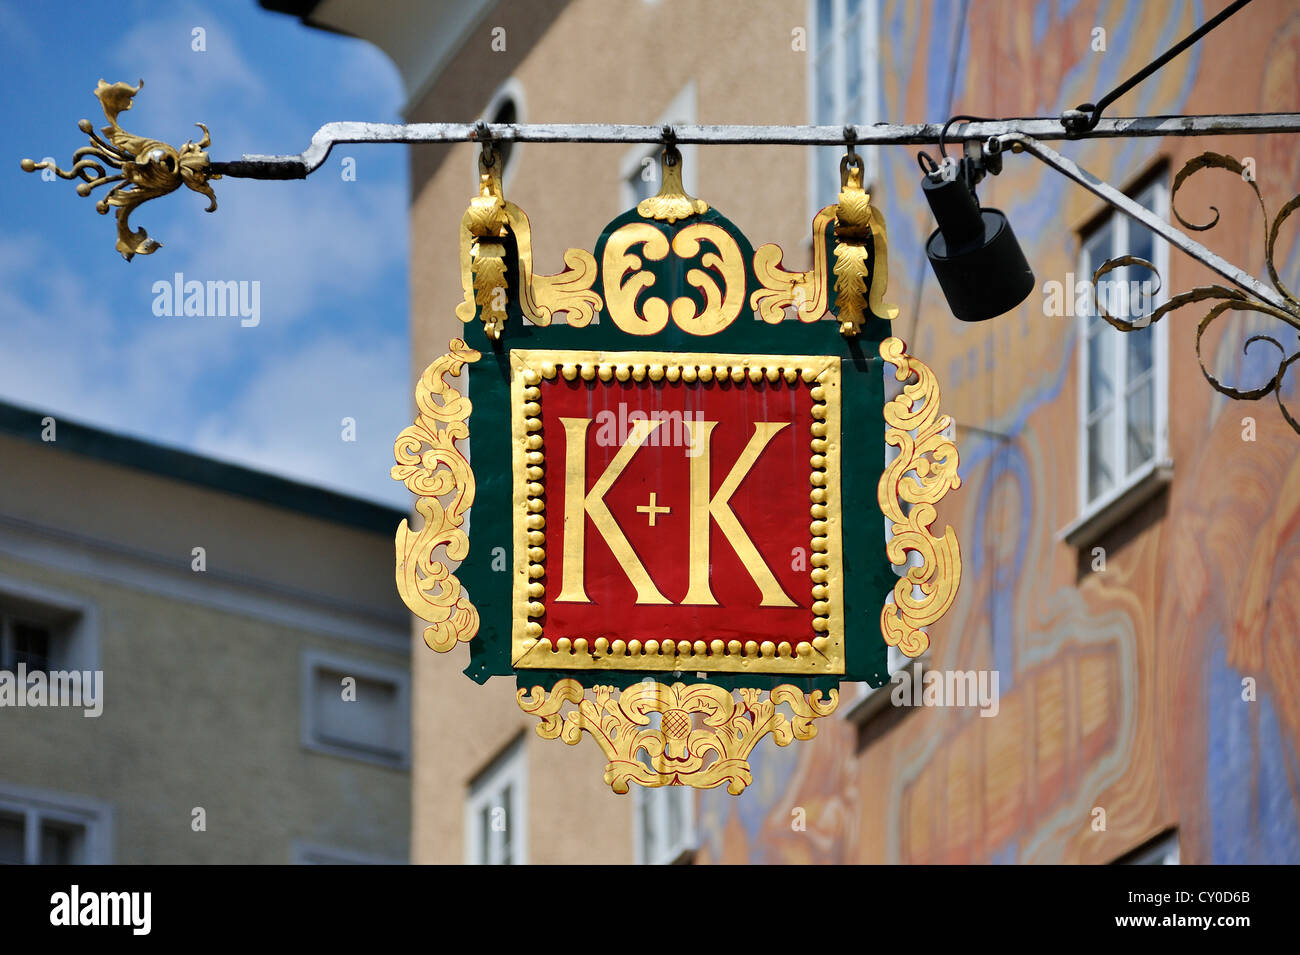 Restaurant sign, K + K, Waagplatz square, Salzburg, Austria, Europe Stock Photo